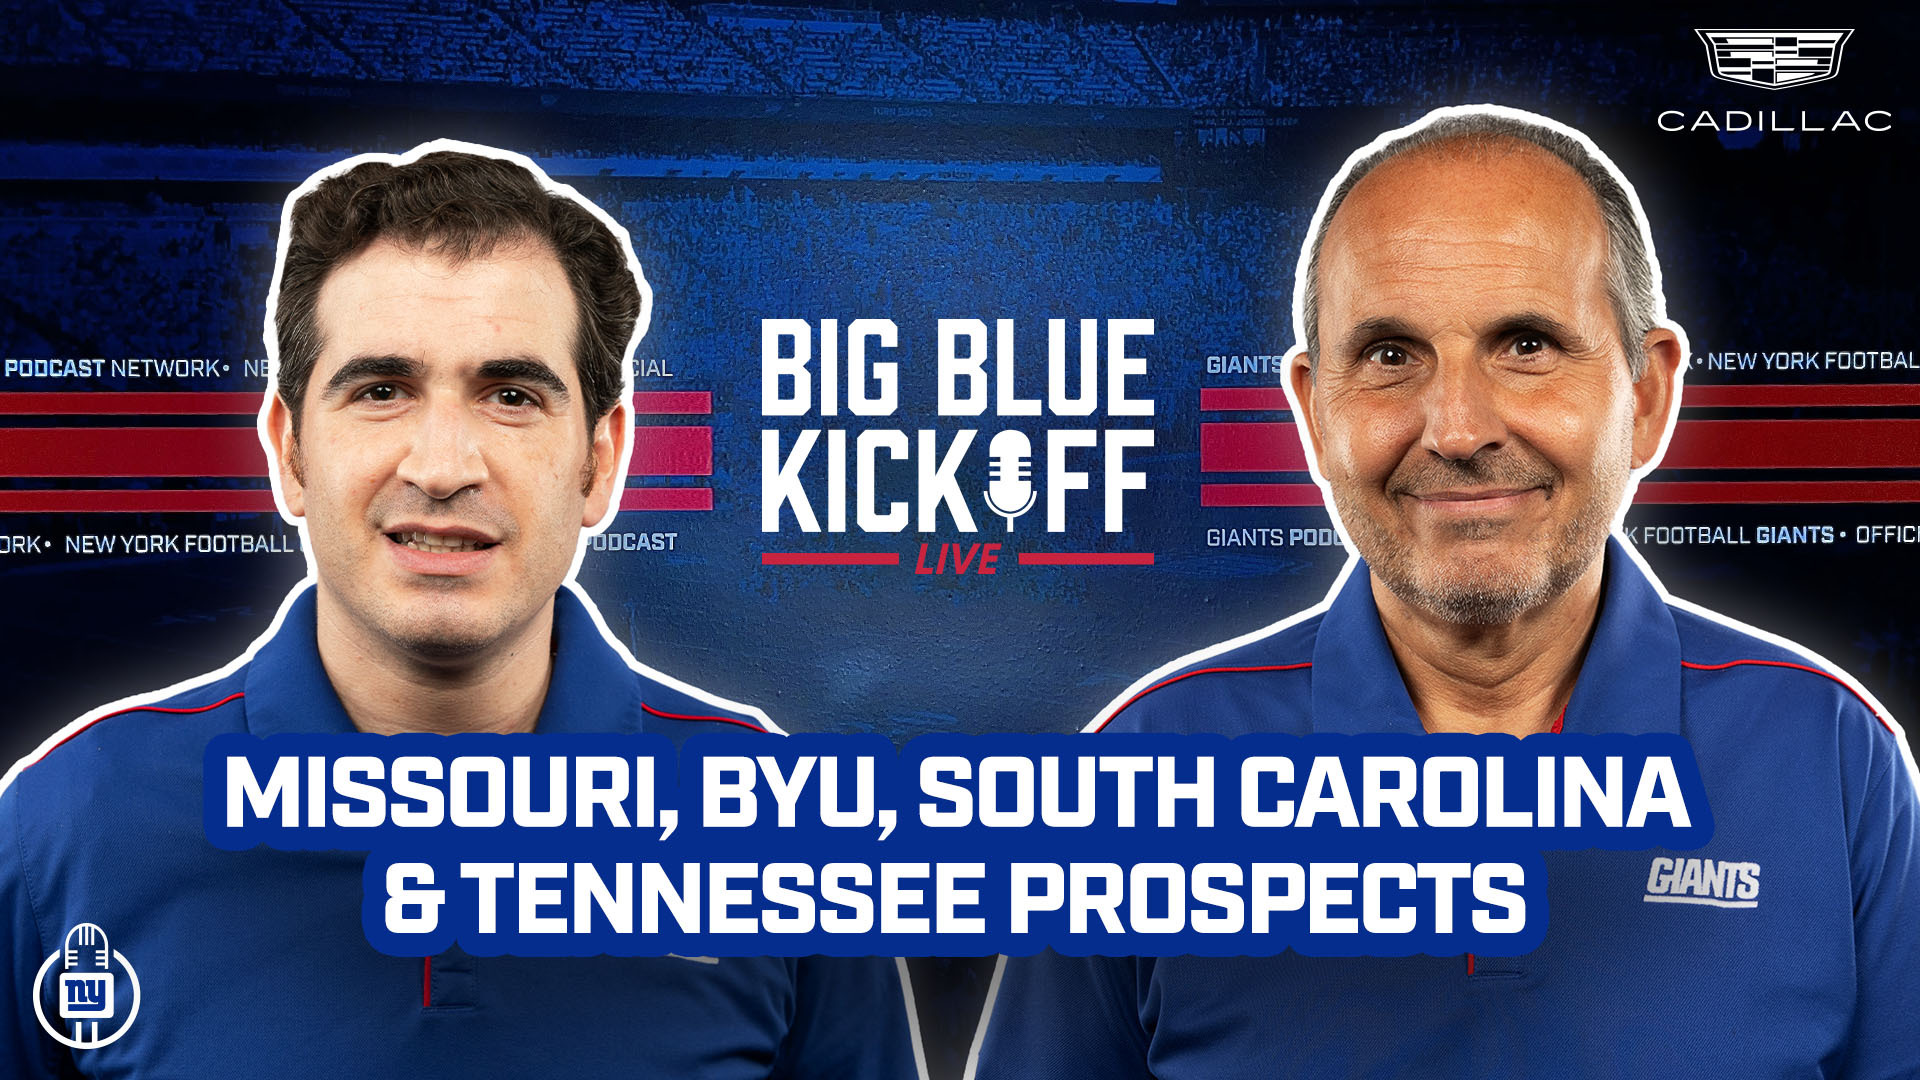 Big Blue Kickoff Live 4/11 | Missouri BYU South Carolina & Tennessee Prospects